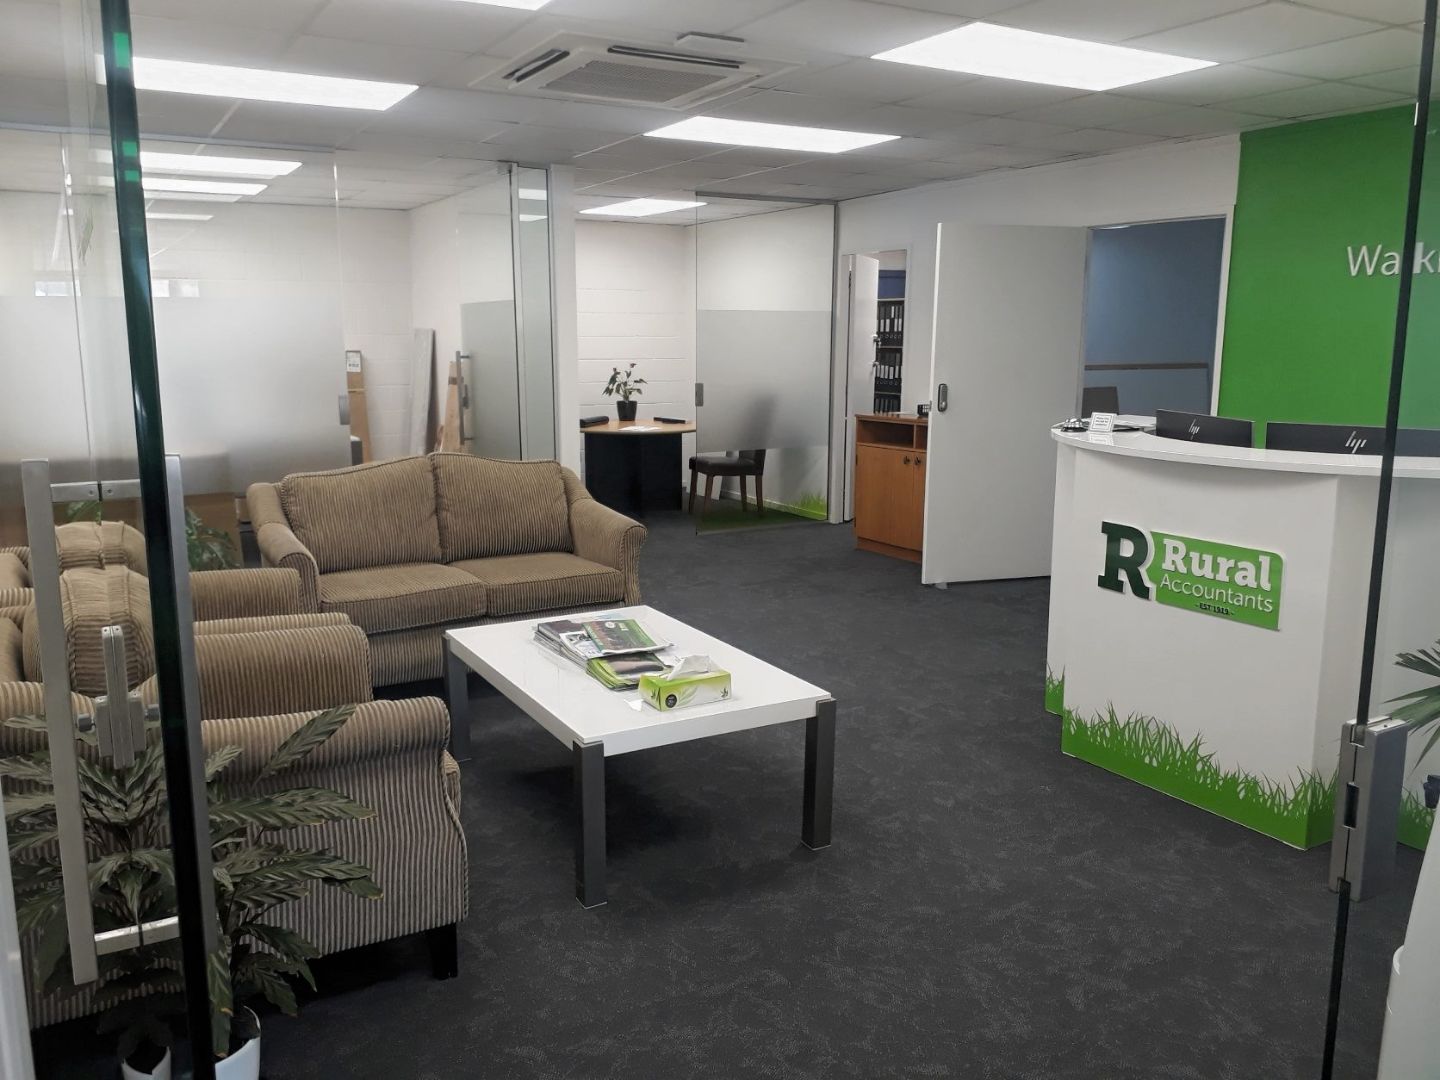 Rural_Accountants_Whakatane_Welcome_to_our_office.jpg